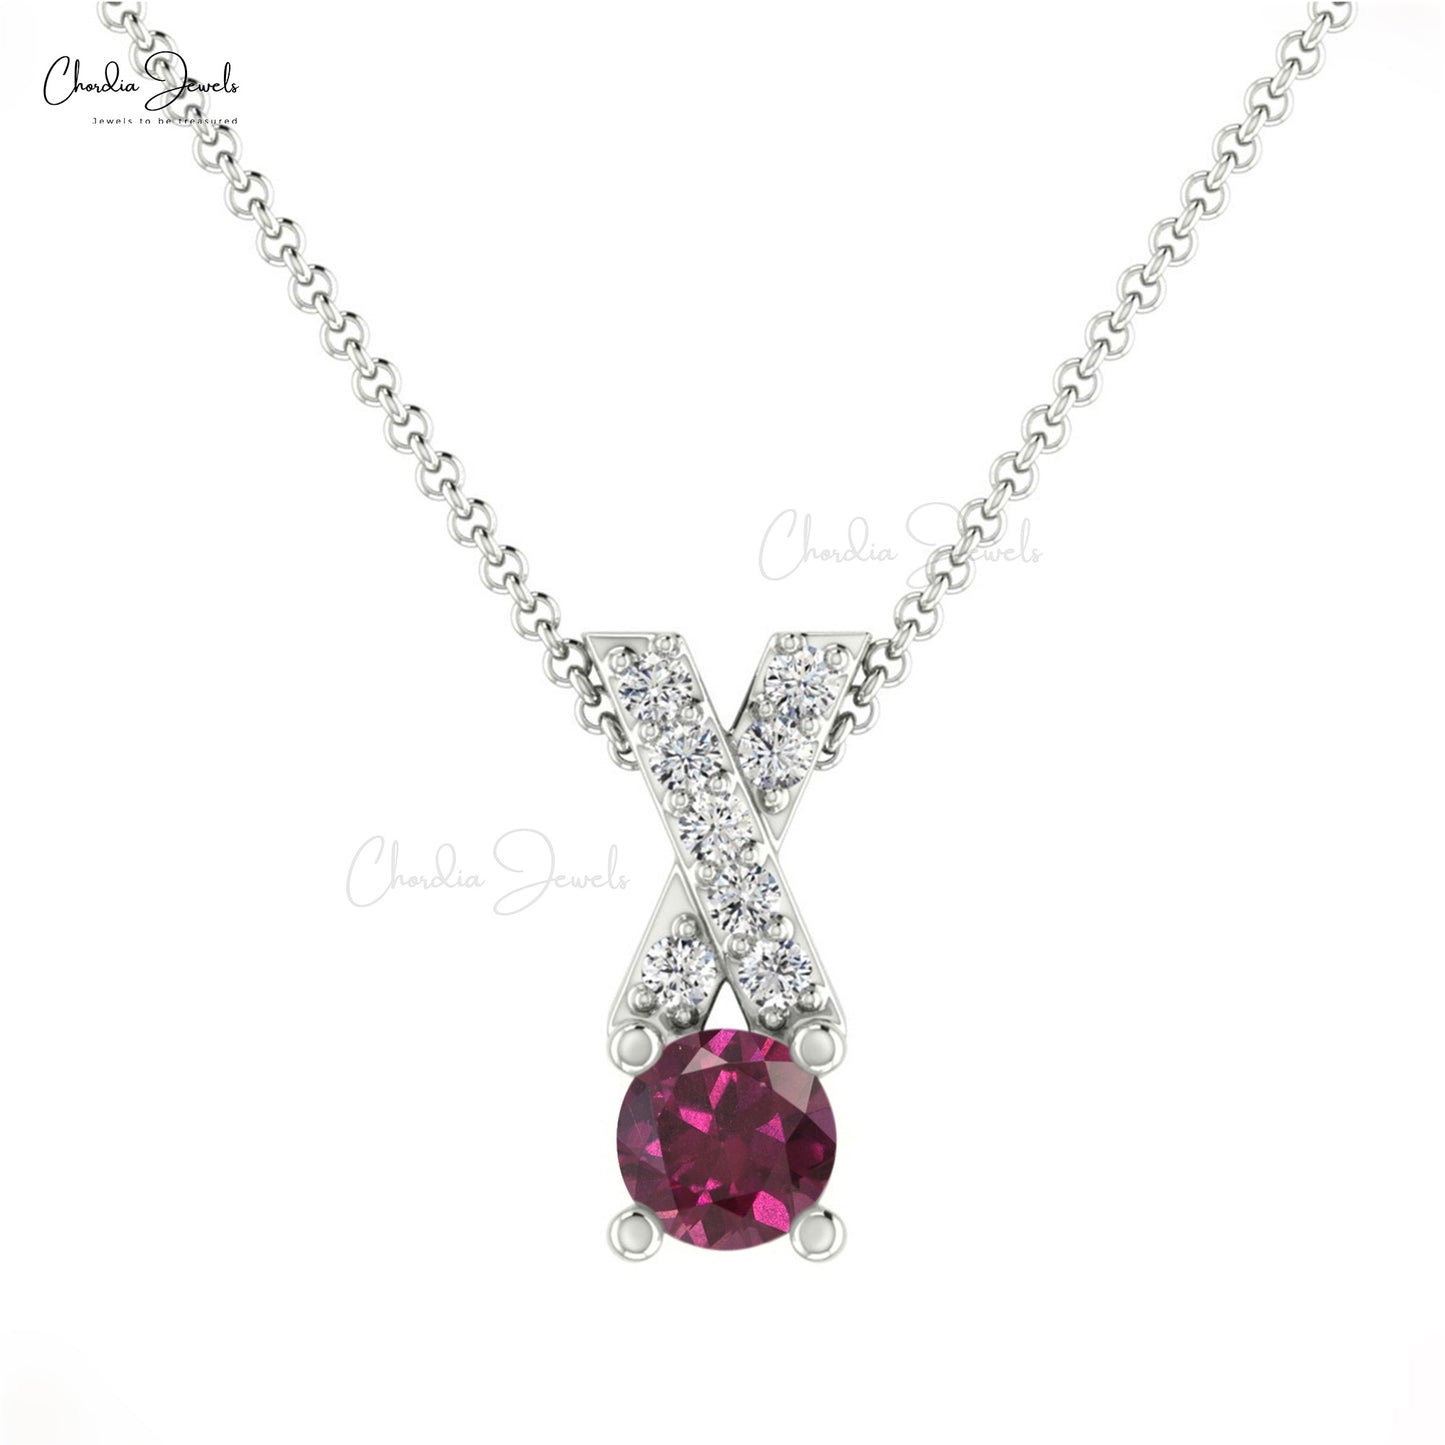 Delicate 14K Gold Rhodolite Garnet & G-H Diamond Criss Cross Pendant Necklace